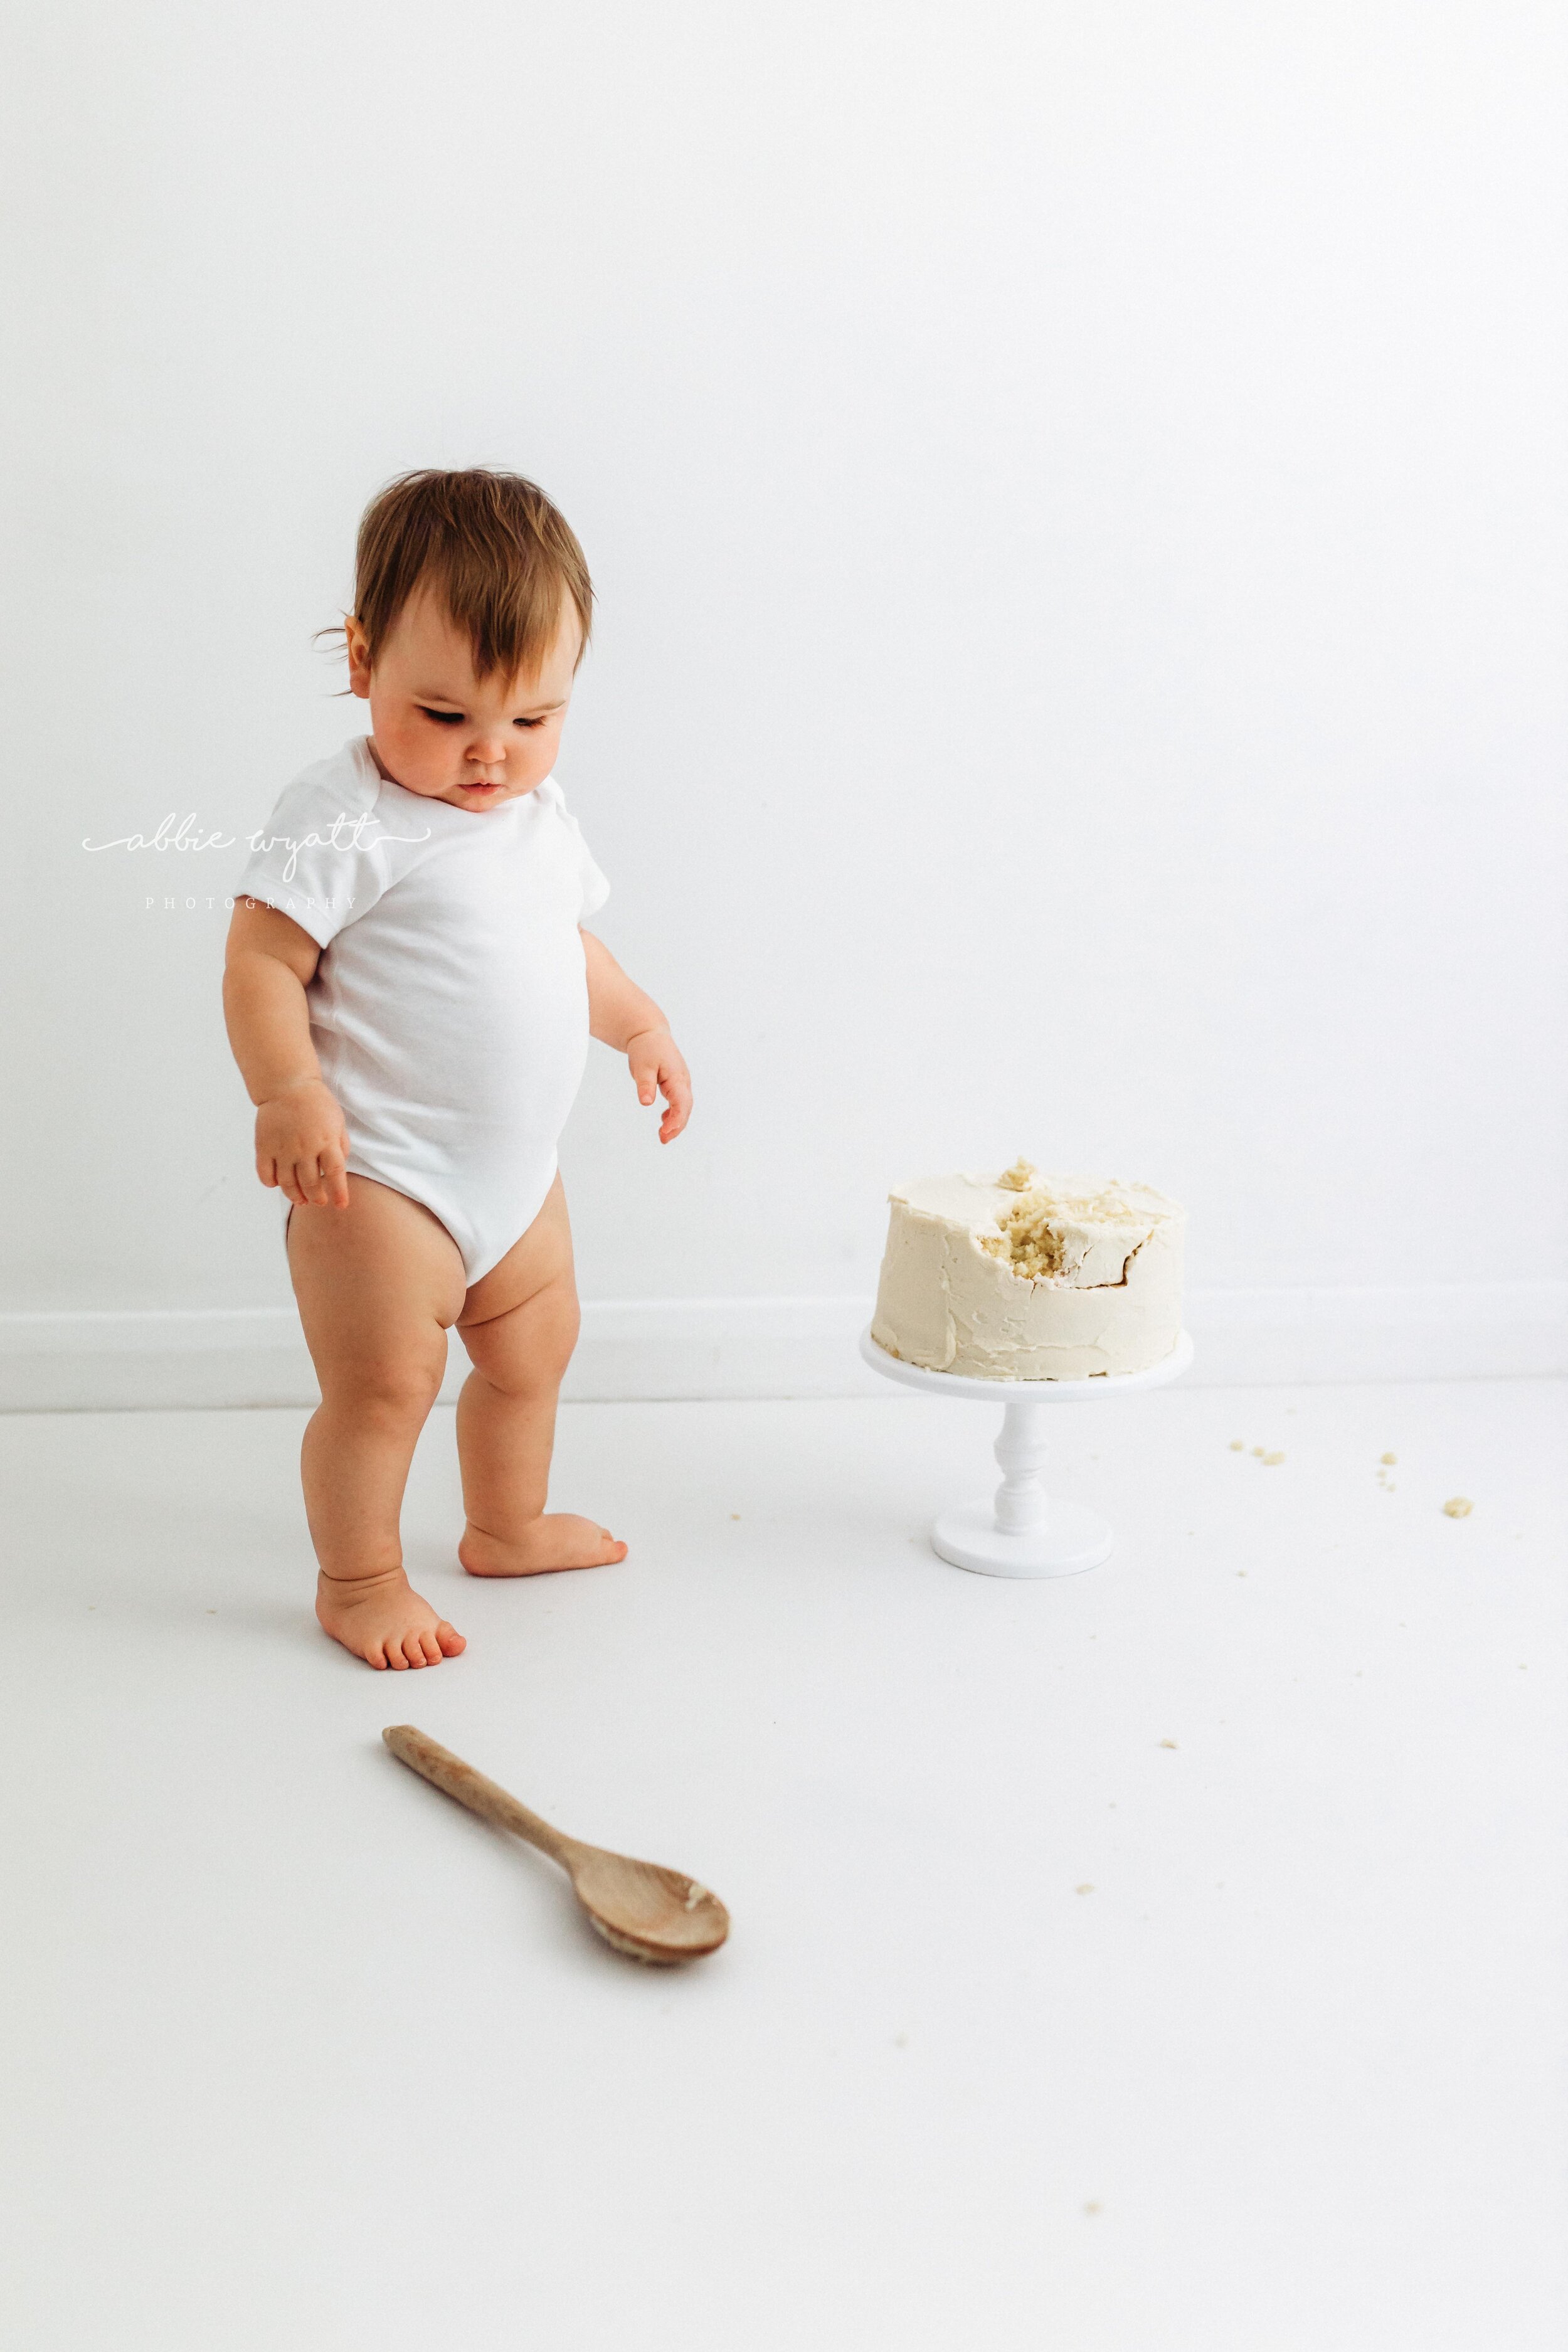 Abbie Wyatt Photography - Newborn, Baby & Cake Smash Photographer - Hemel Hempstead 7.jpg